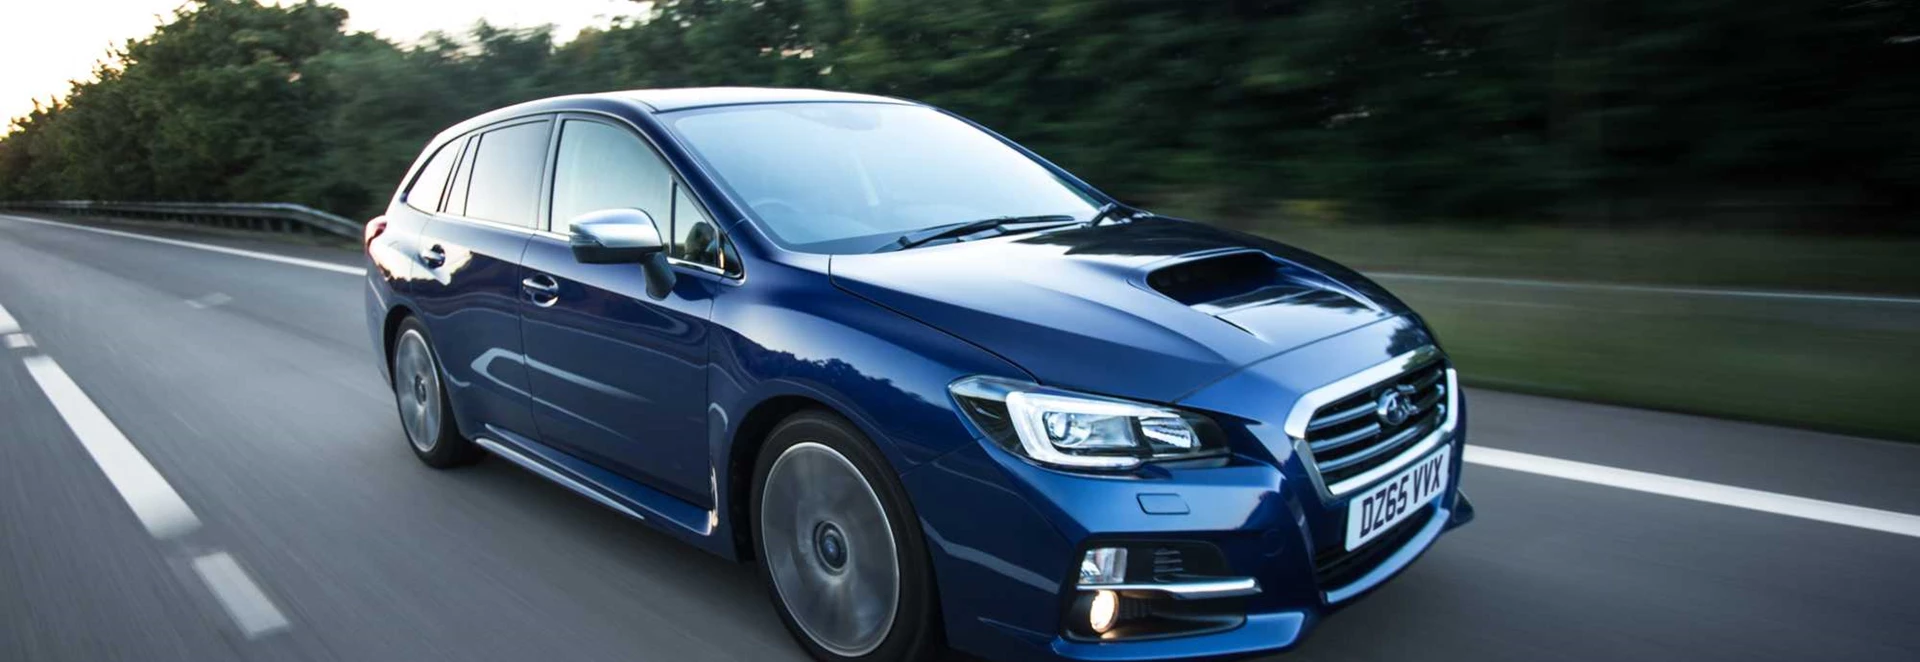 Subaru Levorg estate review 